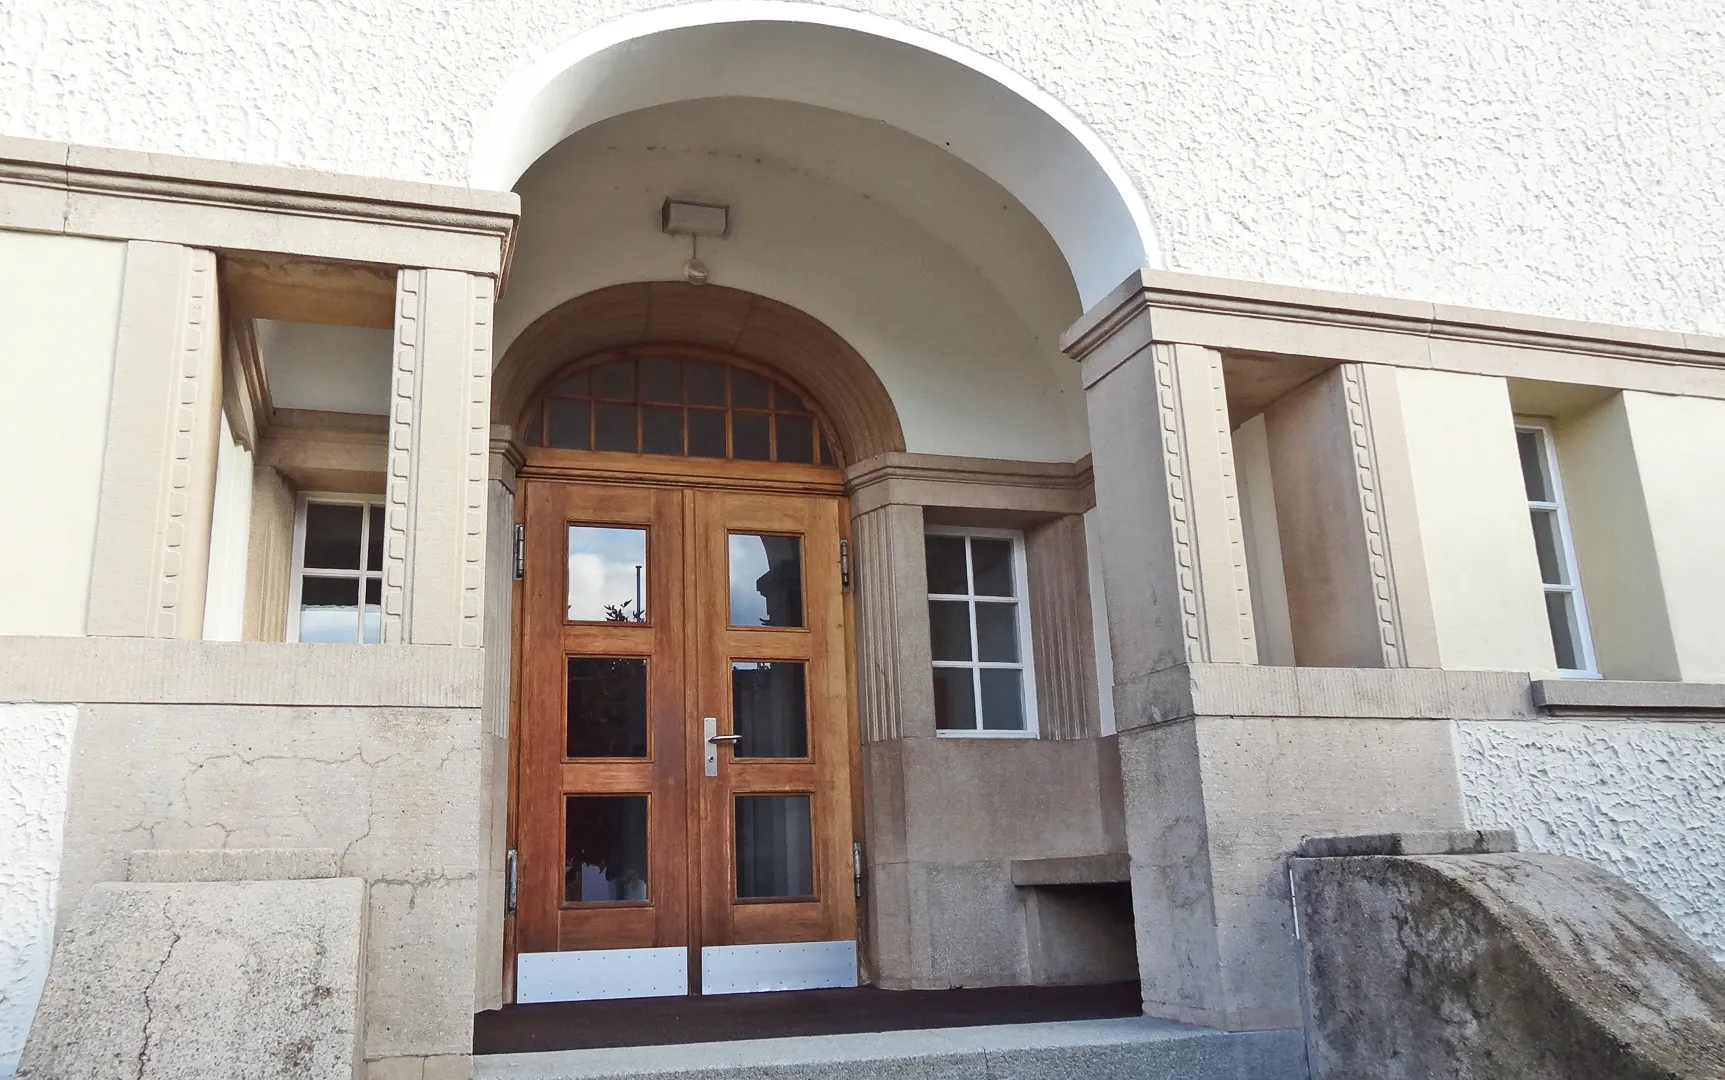 Photo showing: Portal of the Primary School in Bottighofen, Switzerland